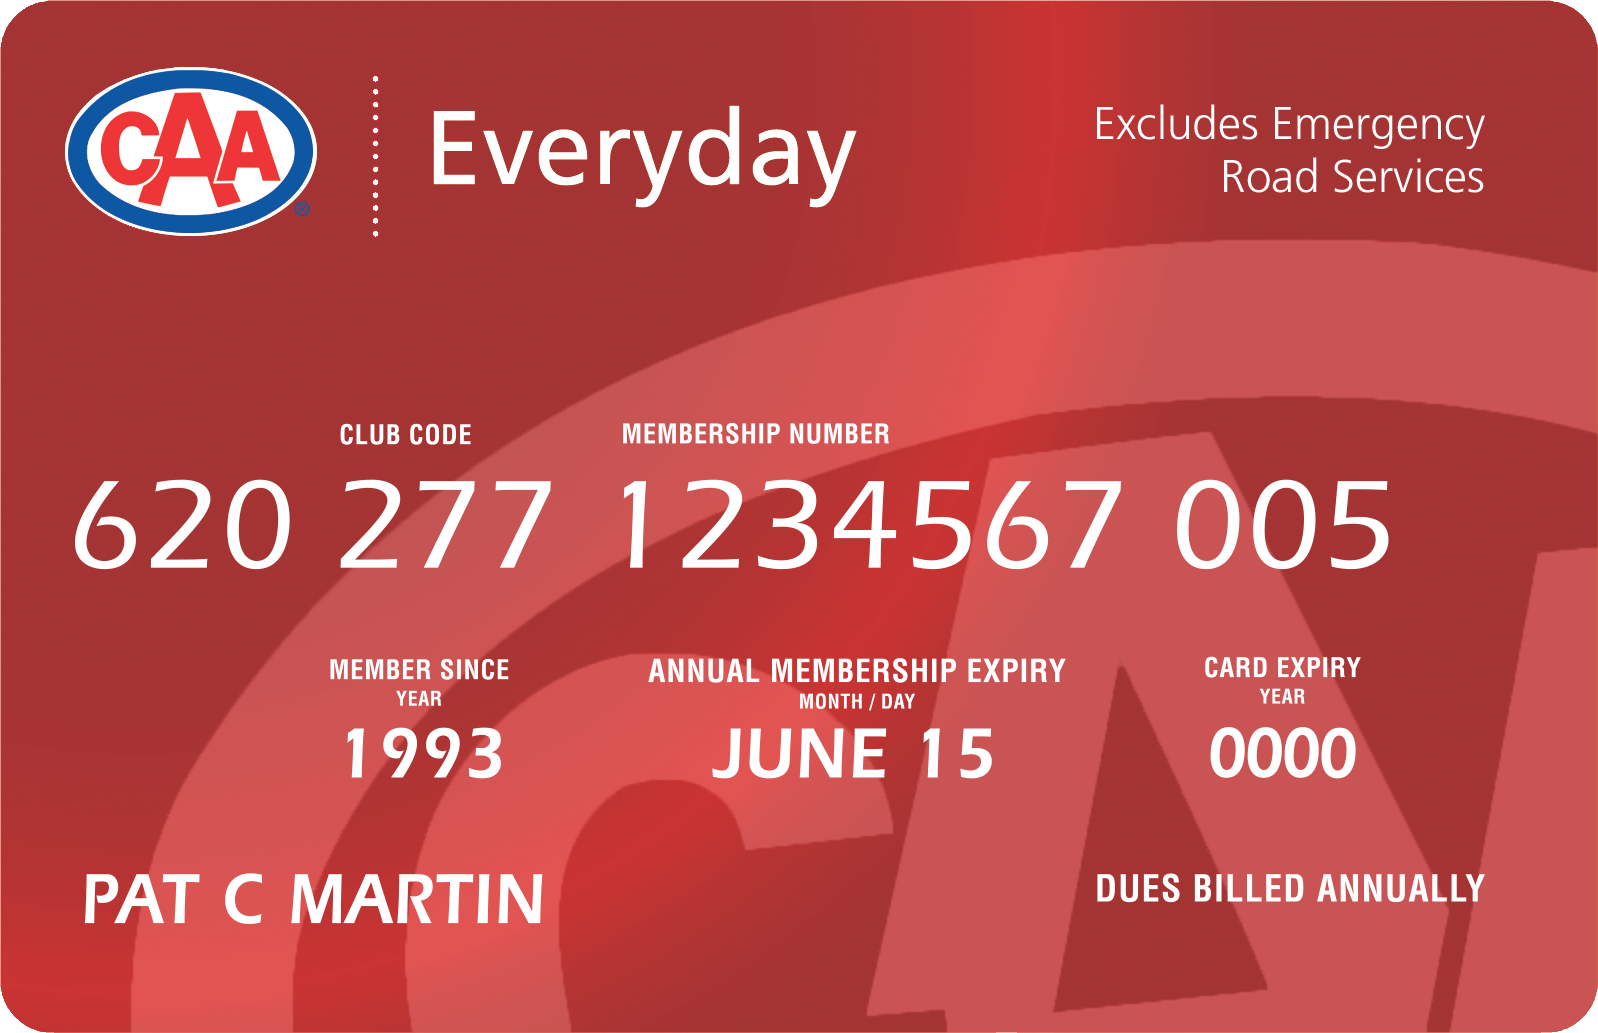 Image of a Everyday CAA Membership card